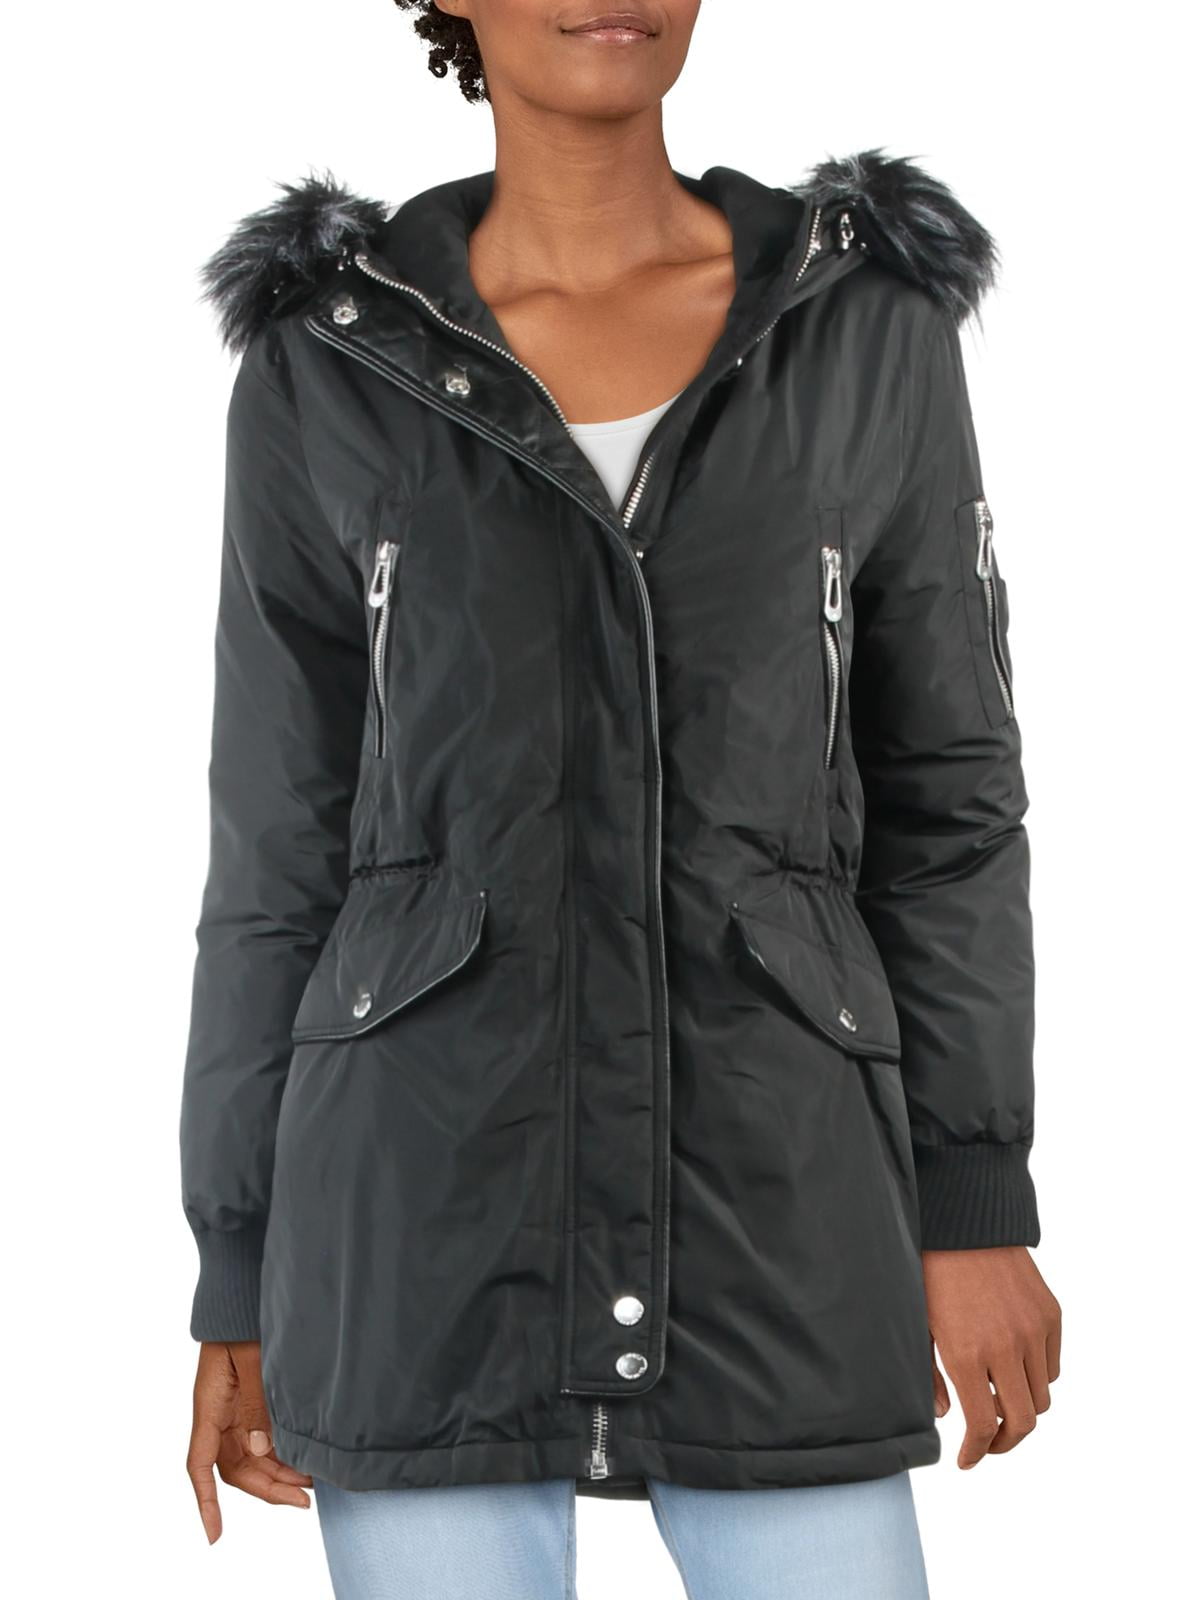 zenicham Womens Winter Hooded Warm Coats Parkas Long Outerwear Jacket Black